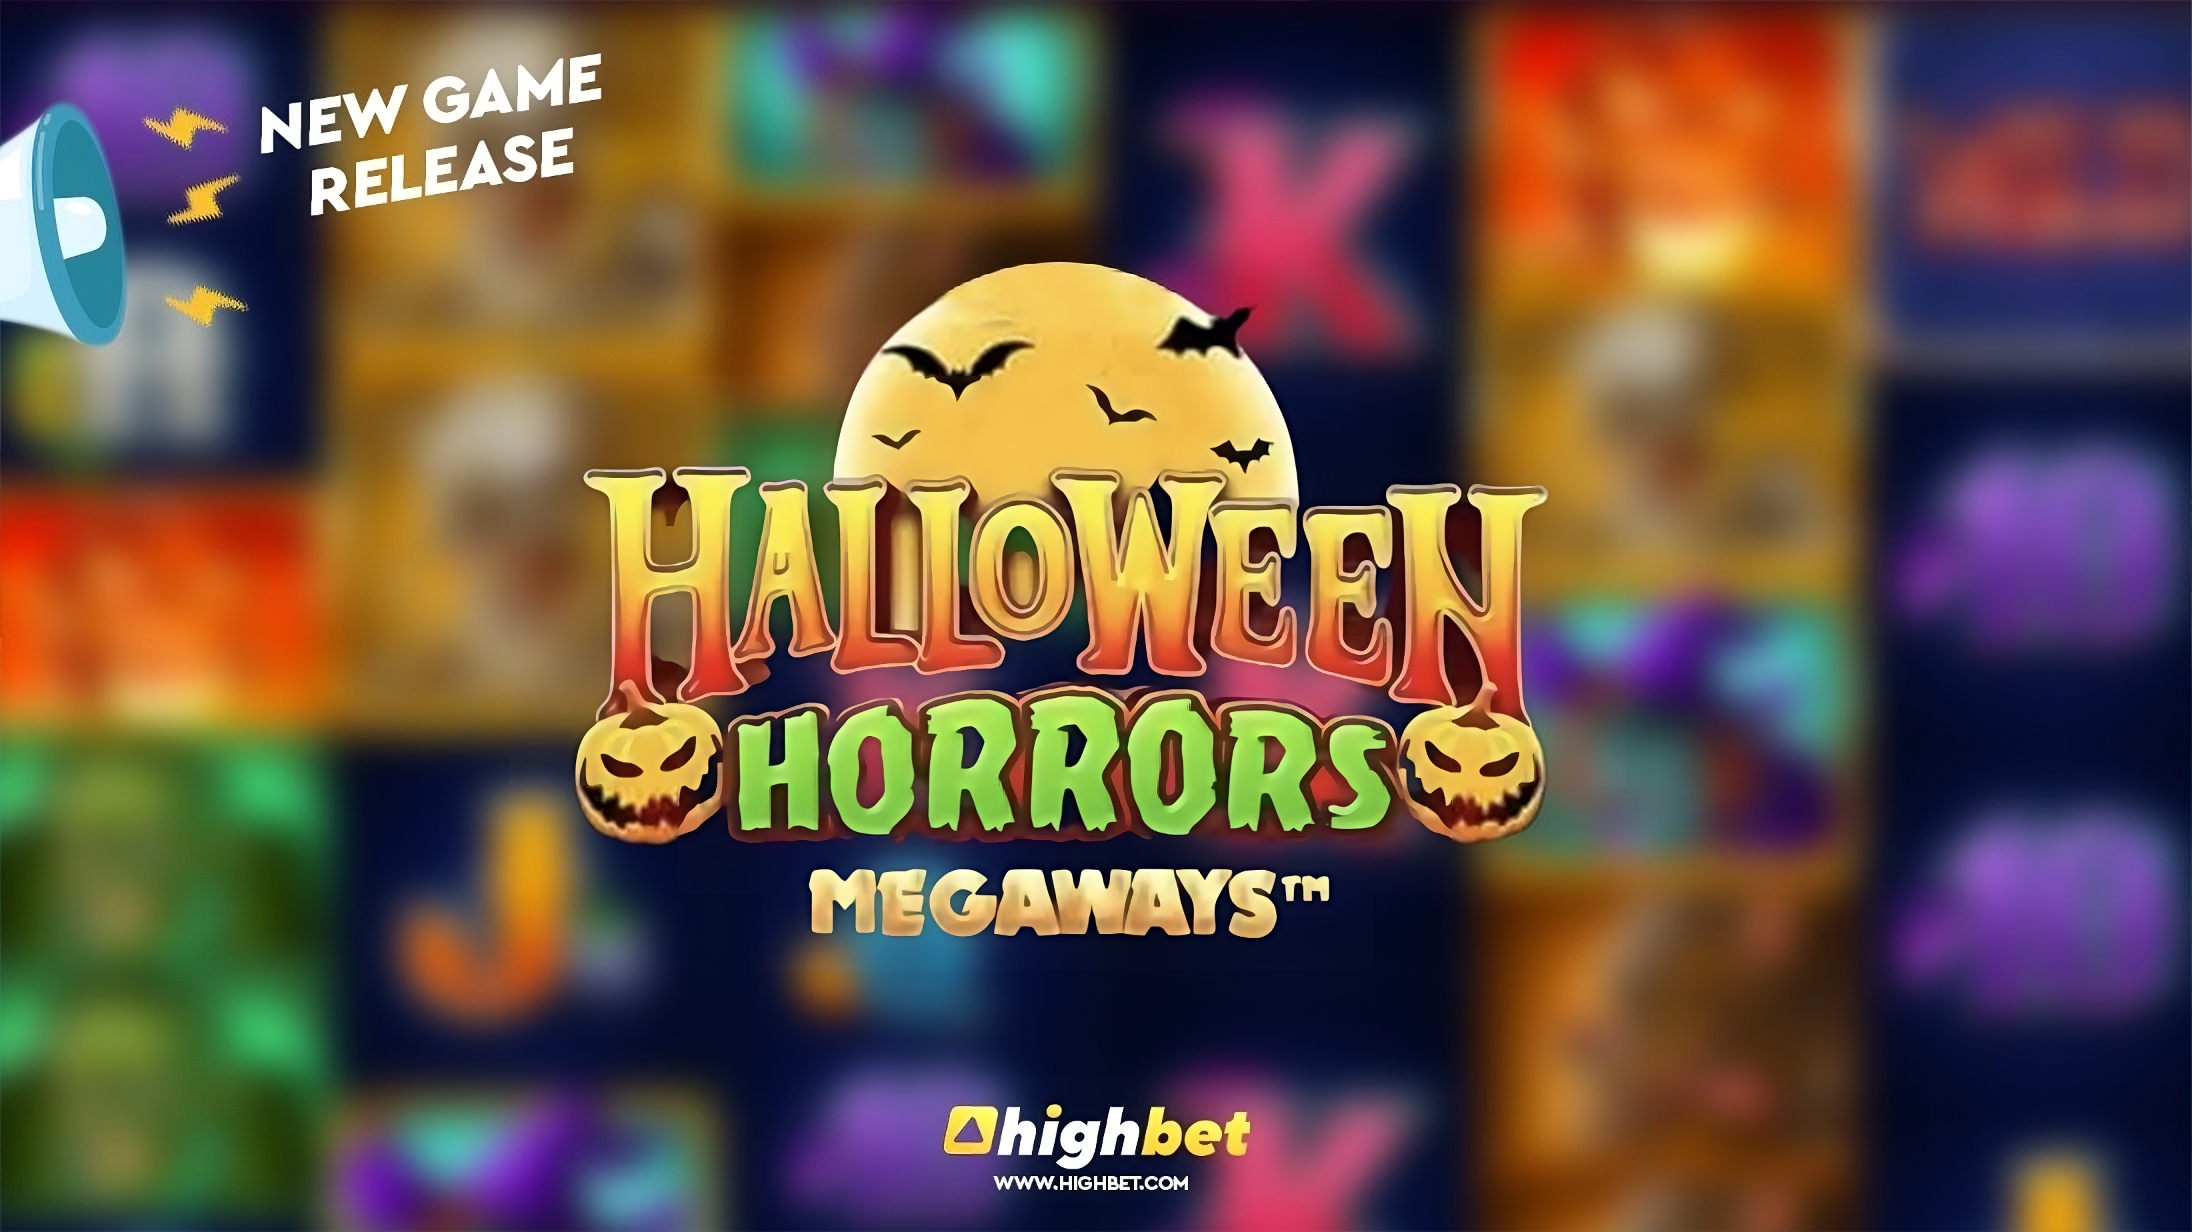 Halloween Horrors Megaways - Iron Dog Studio - Highbet Slot Game Review - online casino